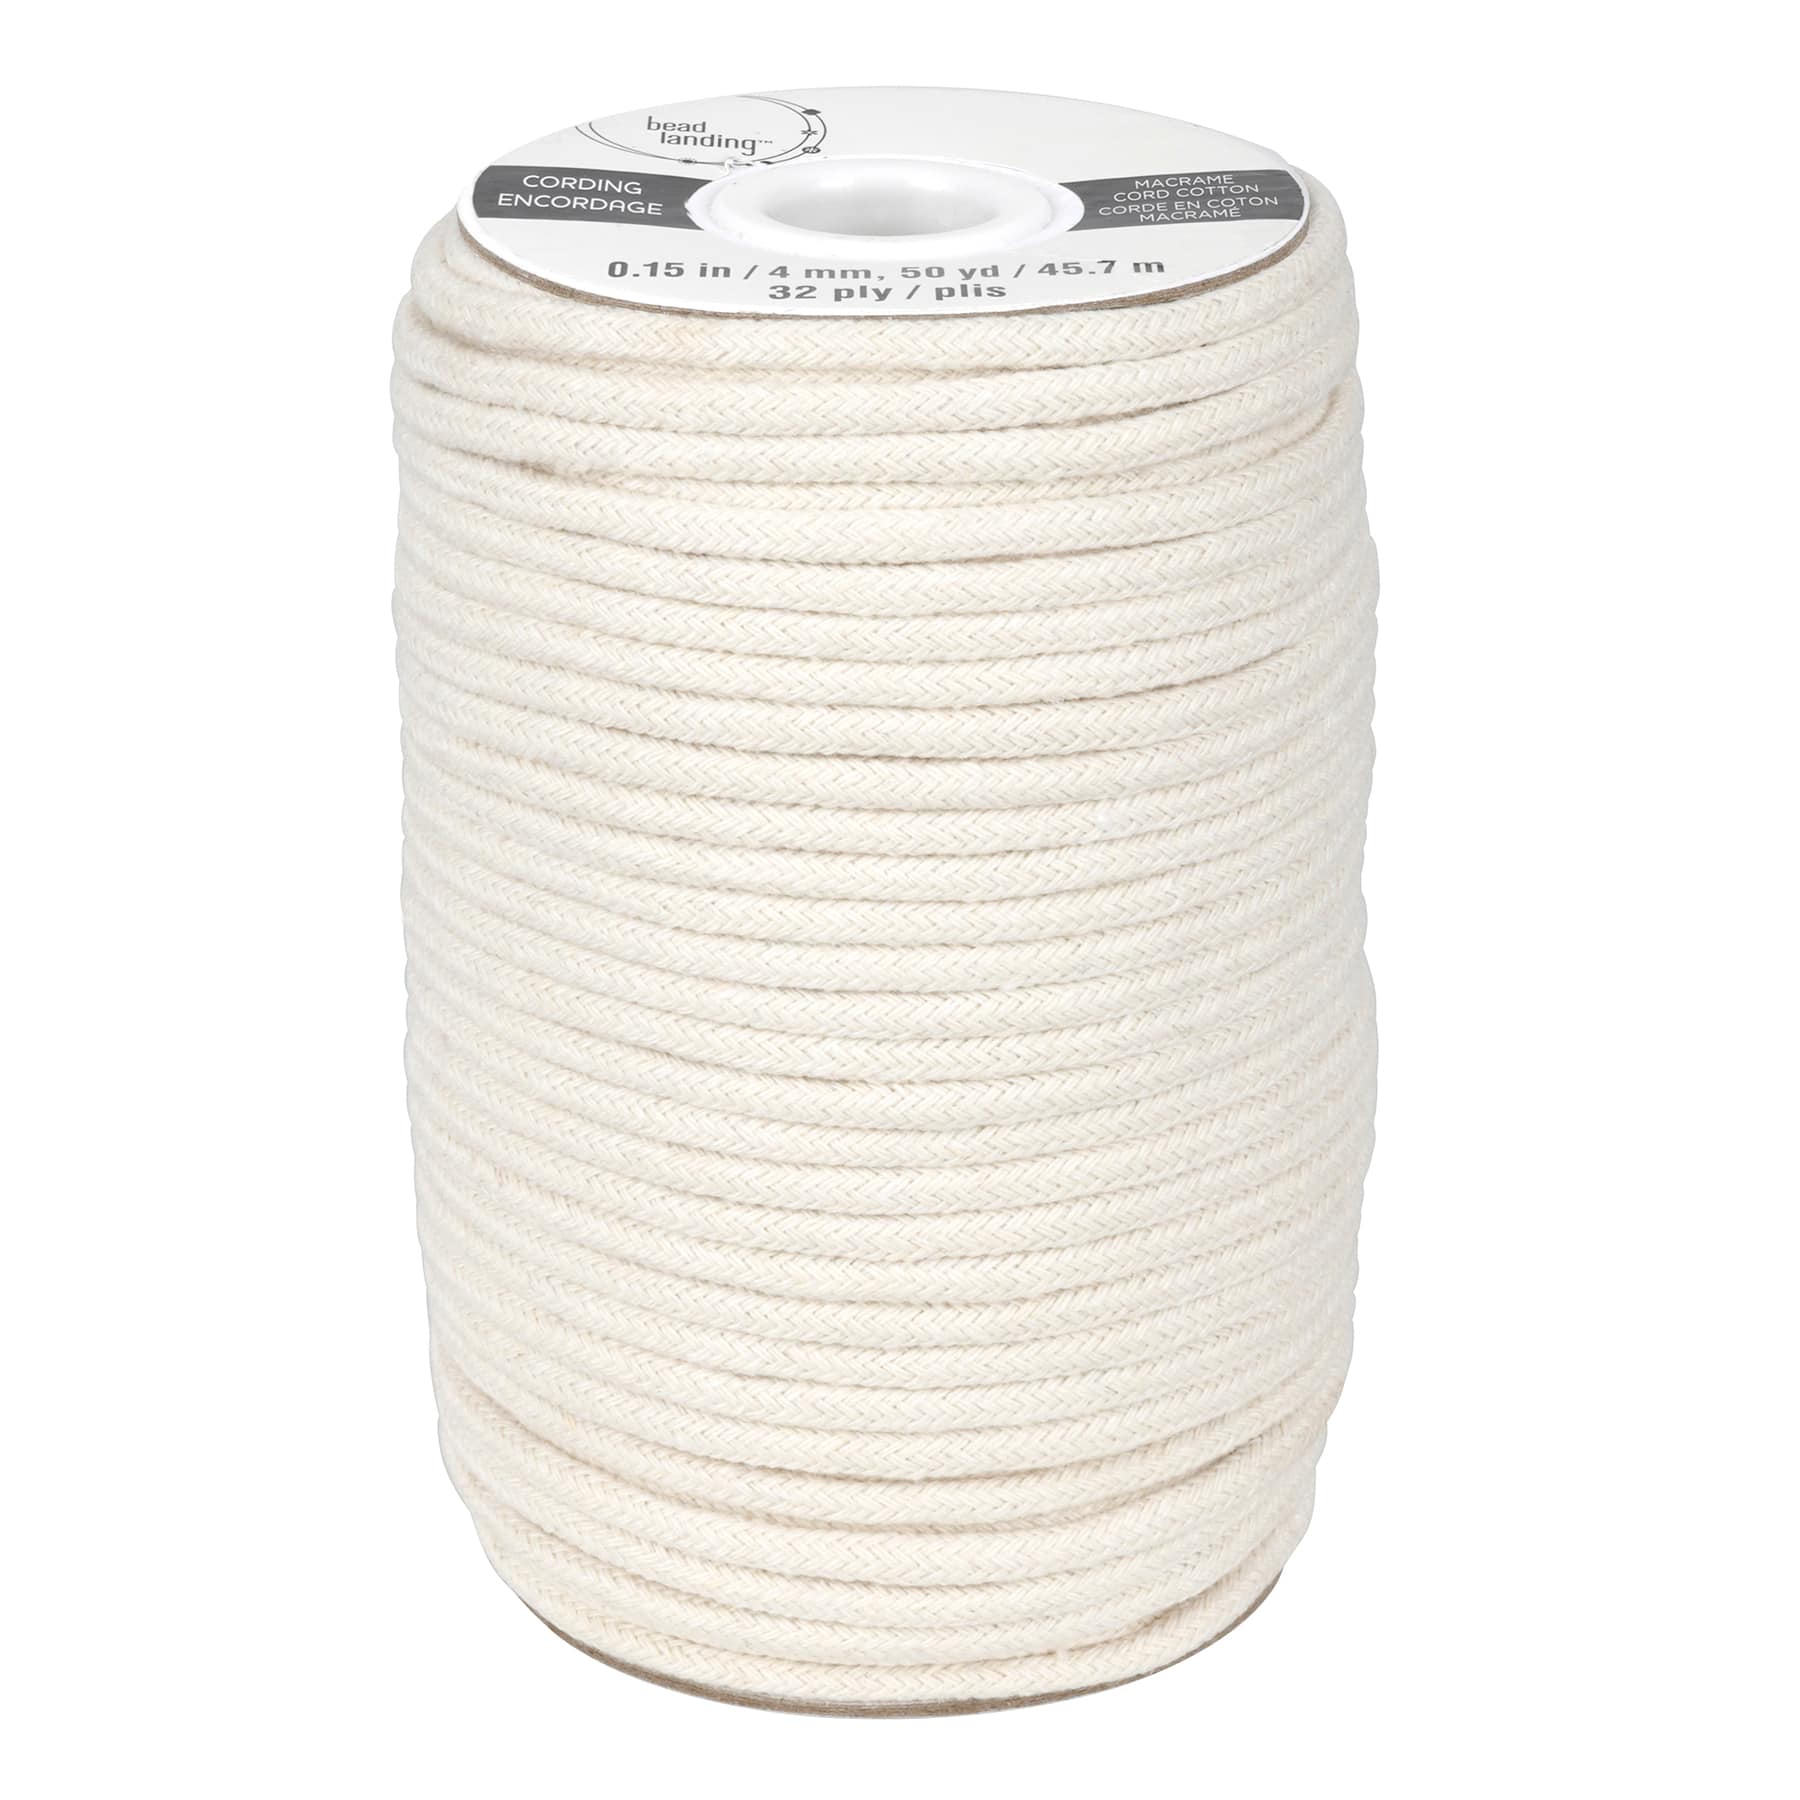 Cotton Macrame Cord